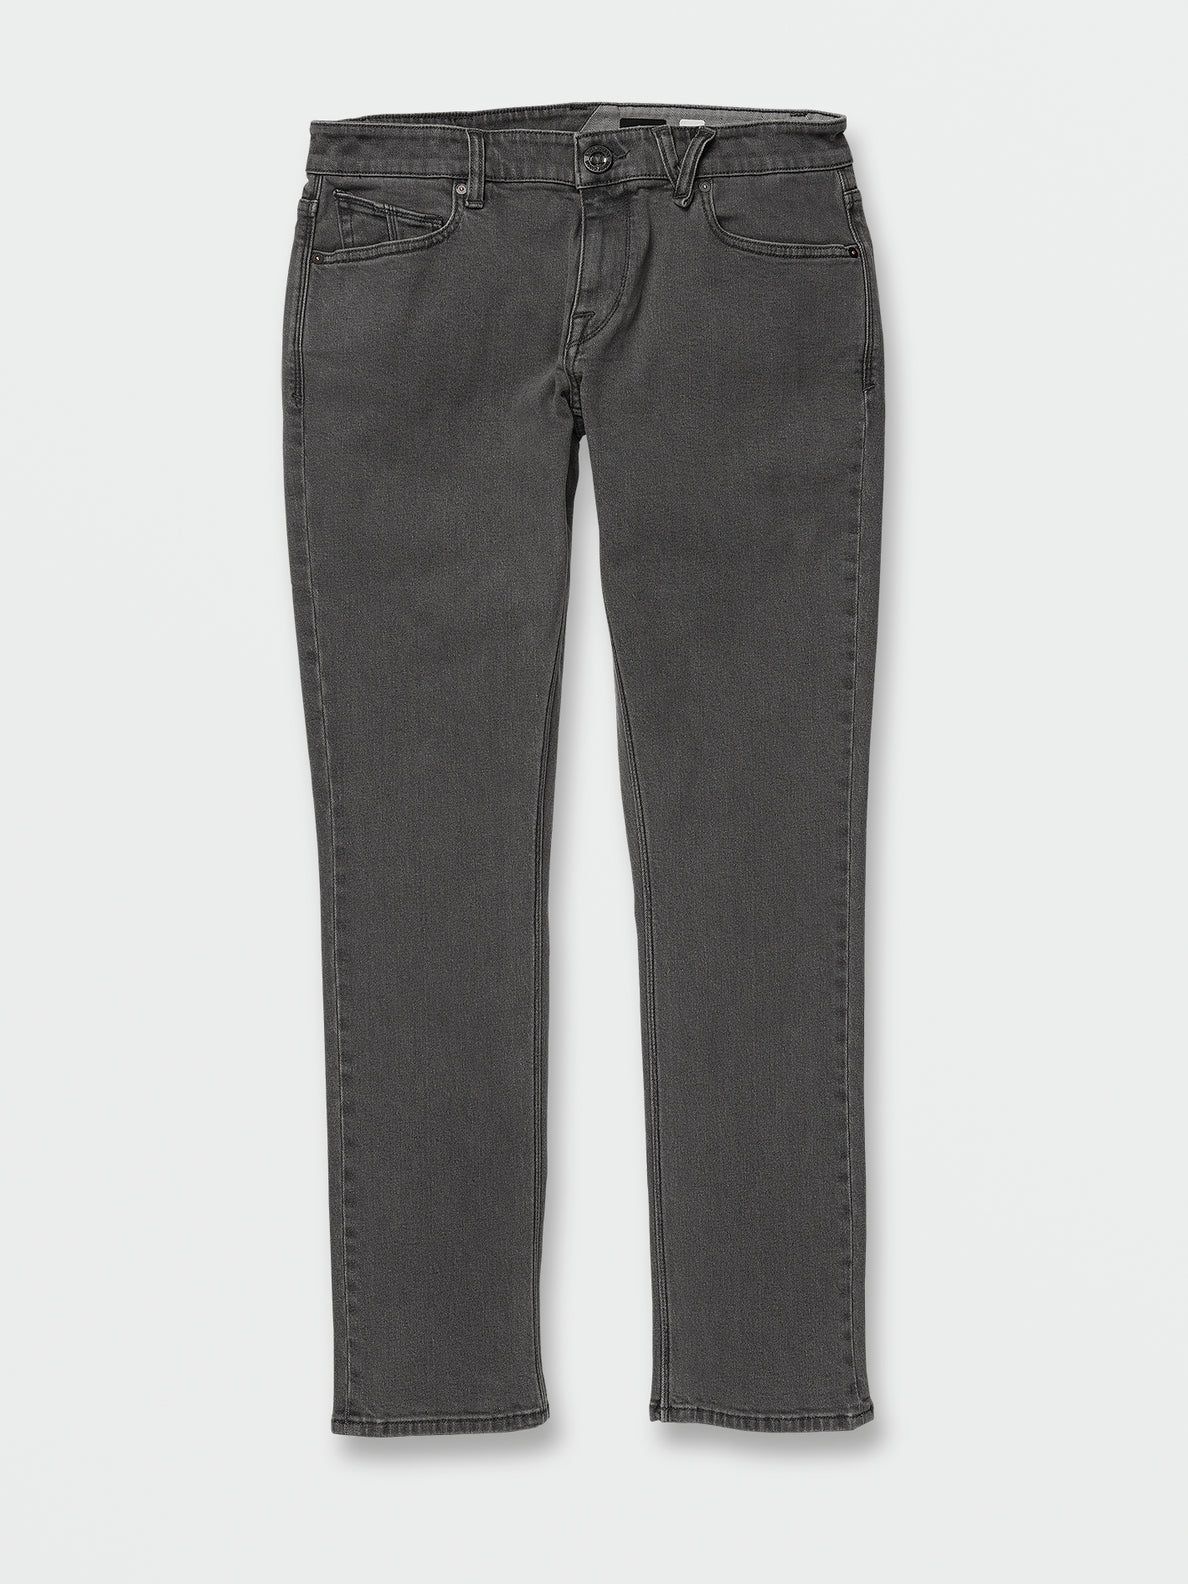 2x4 Skinny Fit Jeans - Black Ozone (A1931510_BKZ) [F]